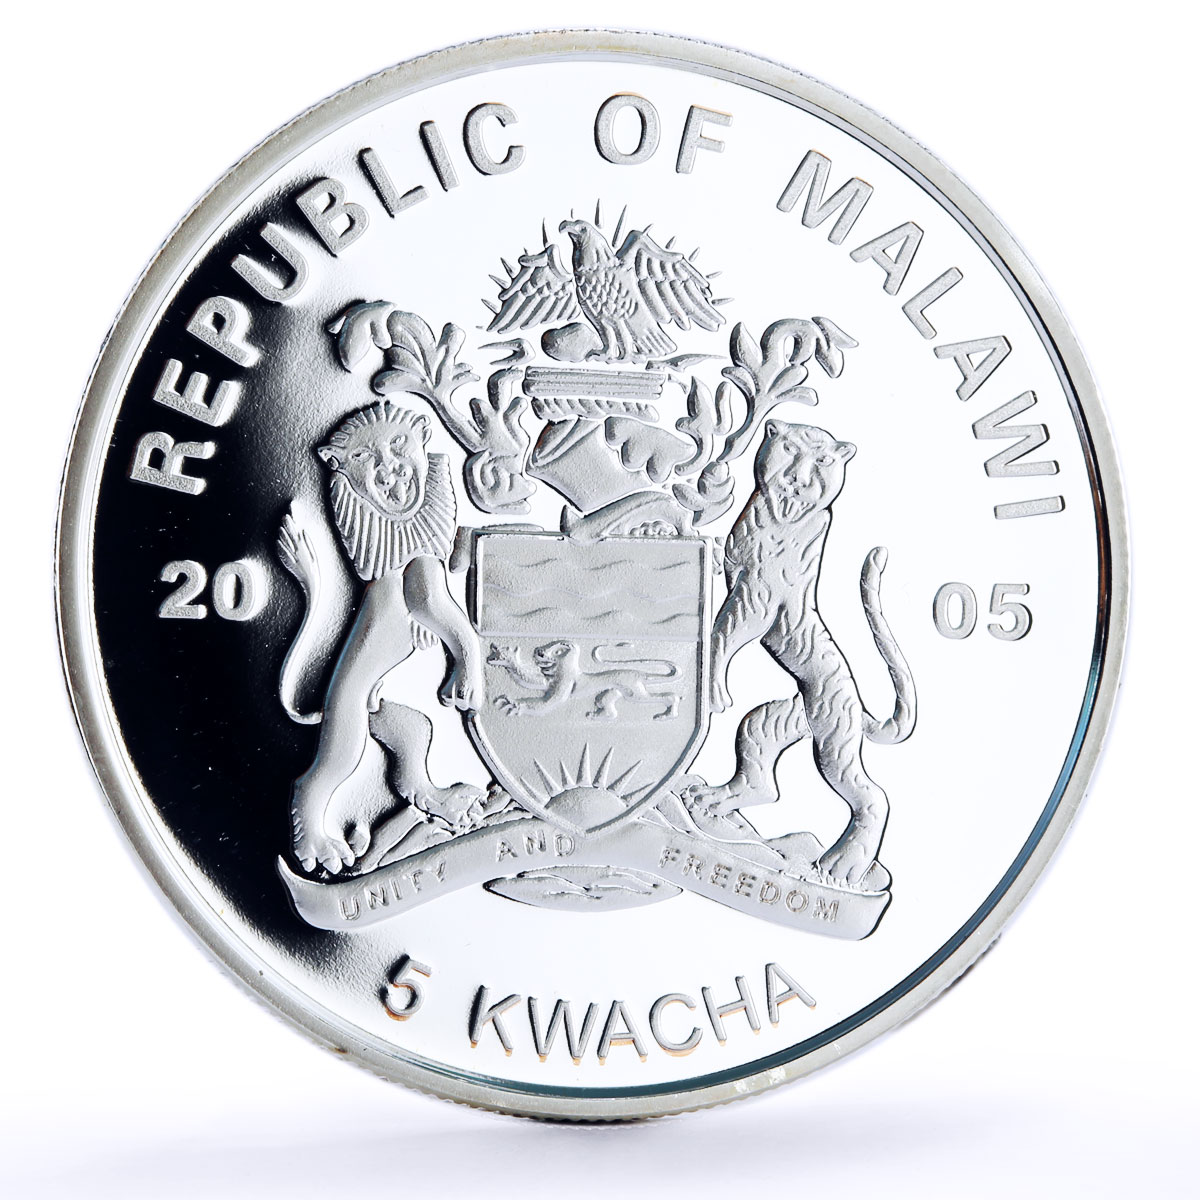 Malawi 5 kwacha Papal Visit John Paul II Ship Clipper proof silver coin 2005